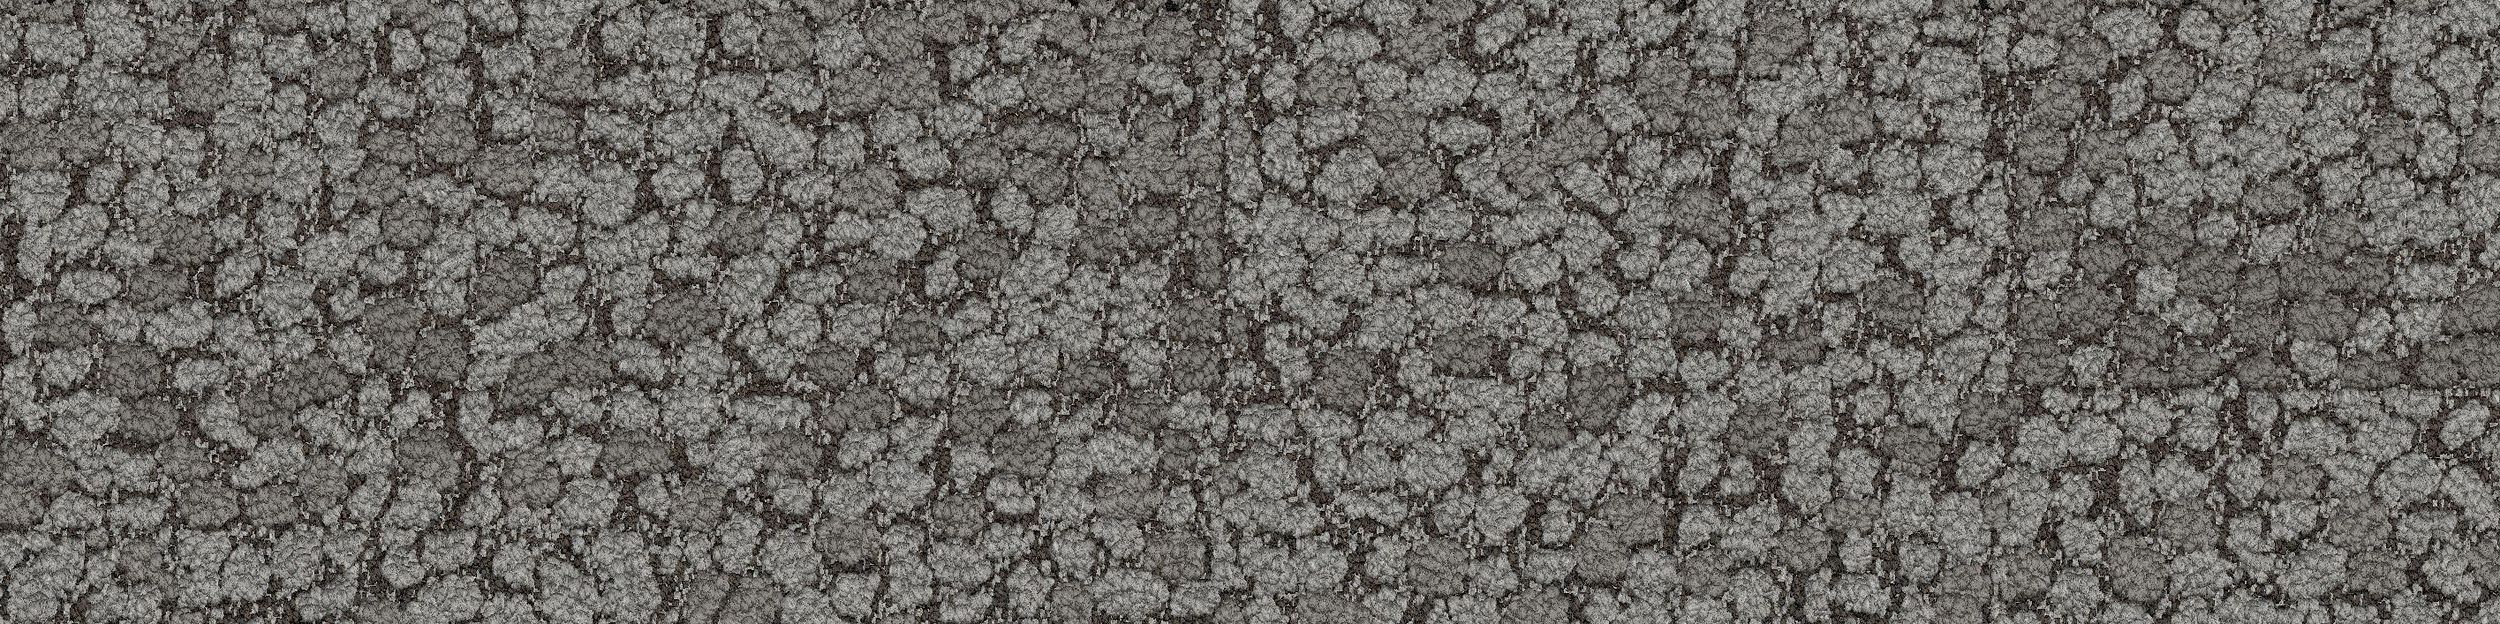 HN840 Carpet Tile In Nickel afbeeldingnummer 2